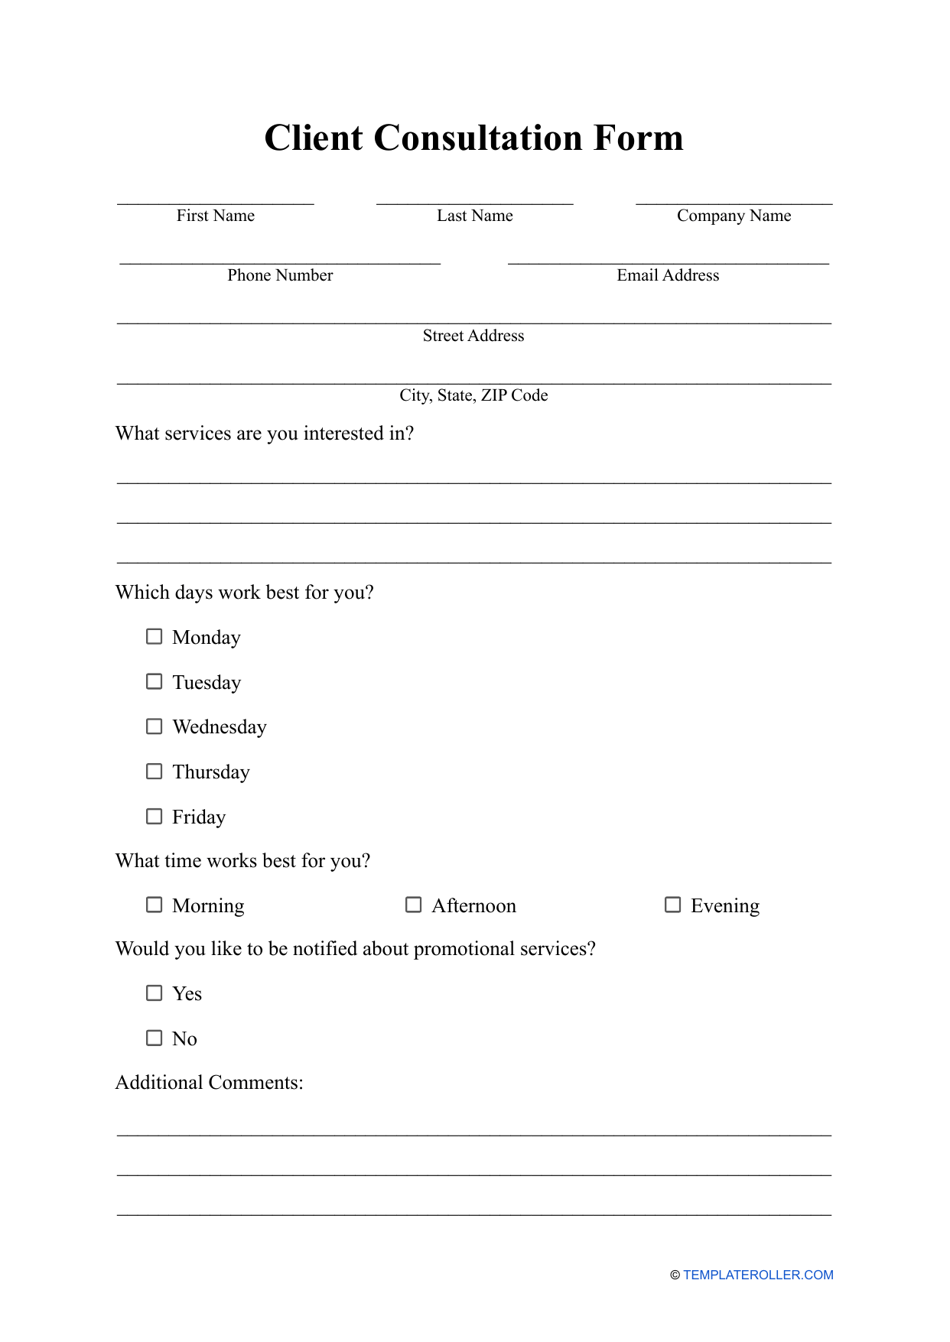 Client Consultation Form, Page 1